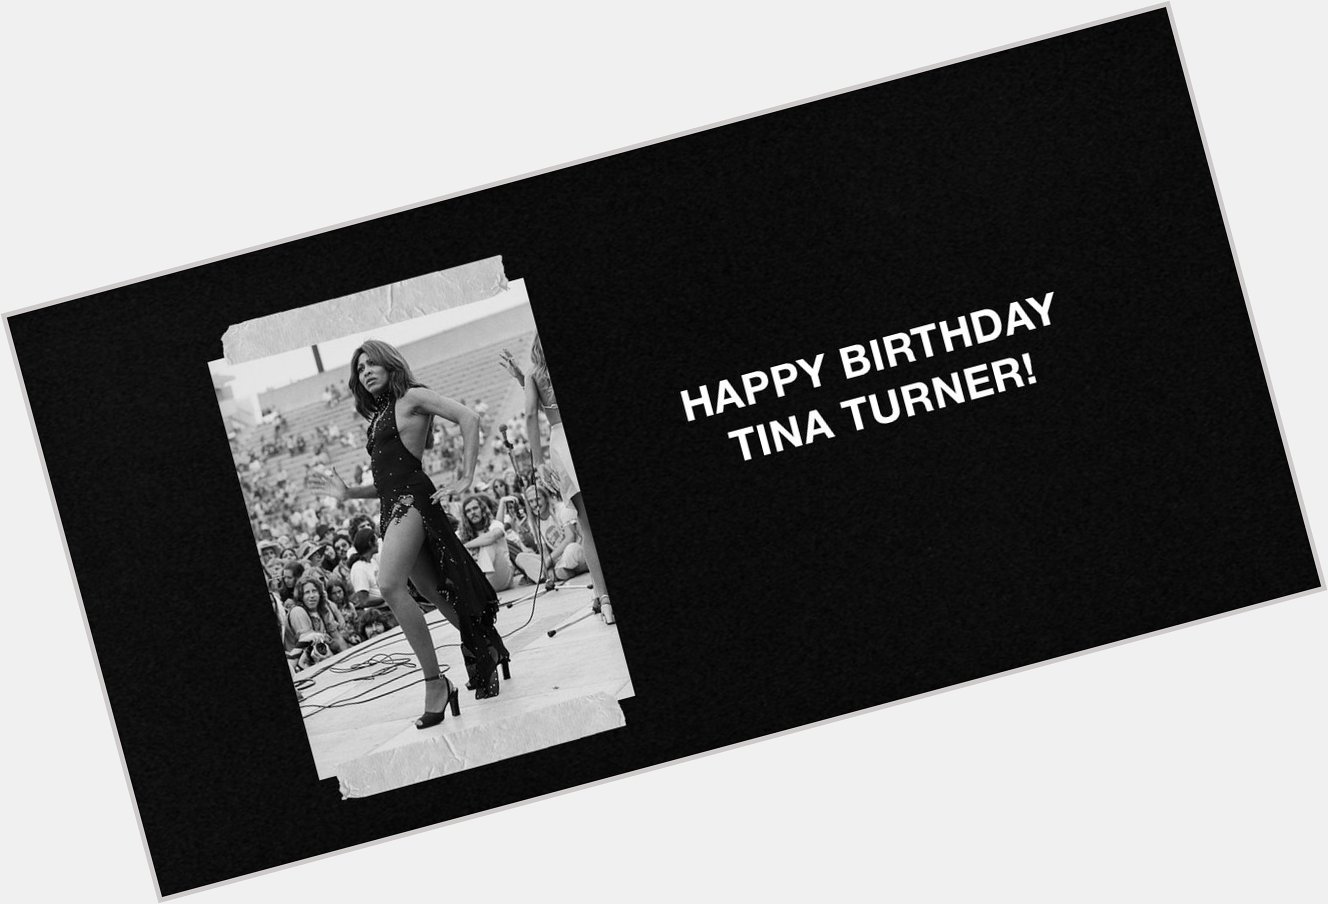 Happy 78th birthday to the legendary Ms. Tina Turner! 